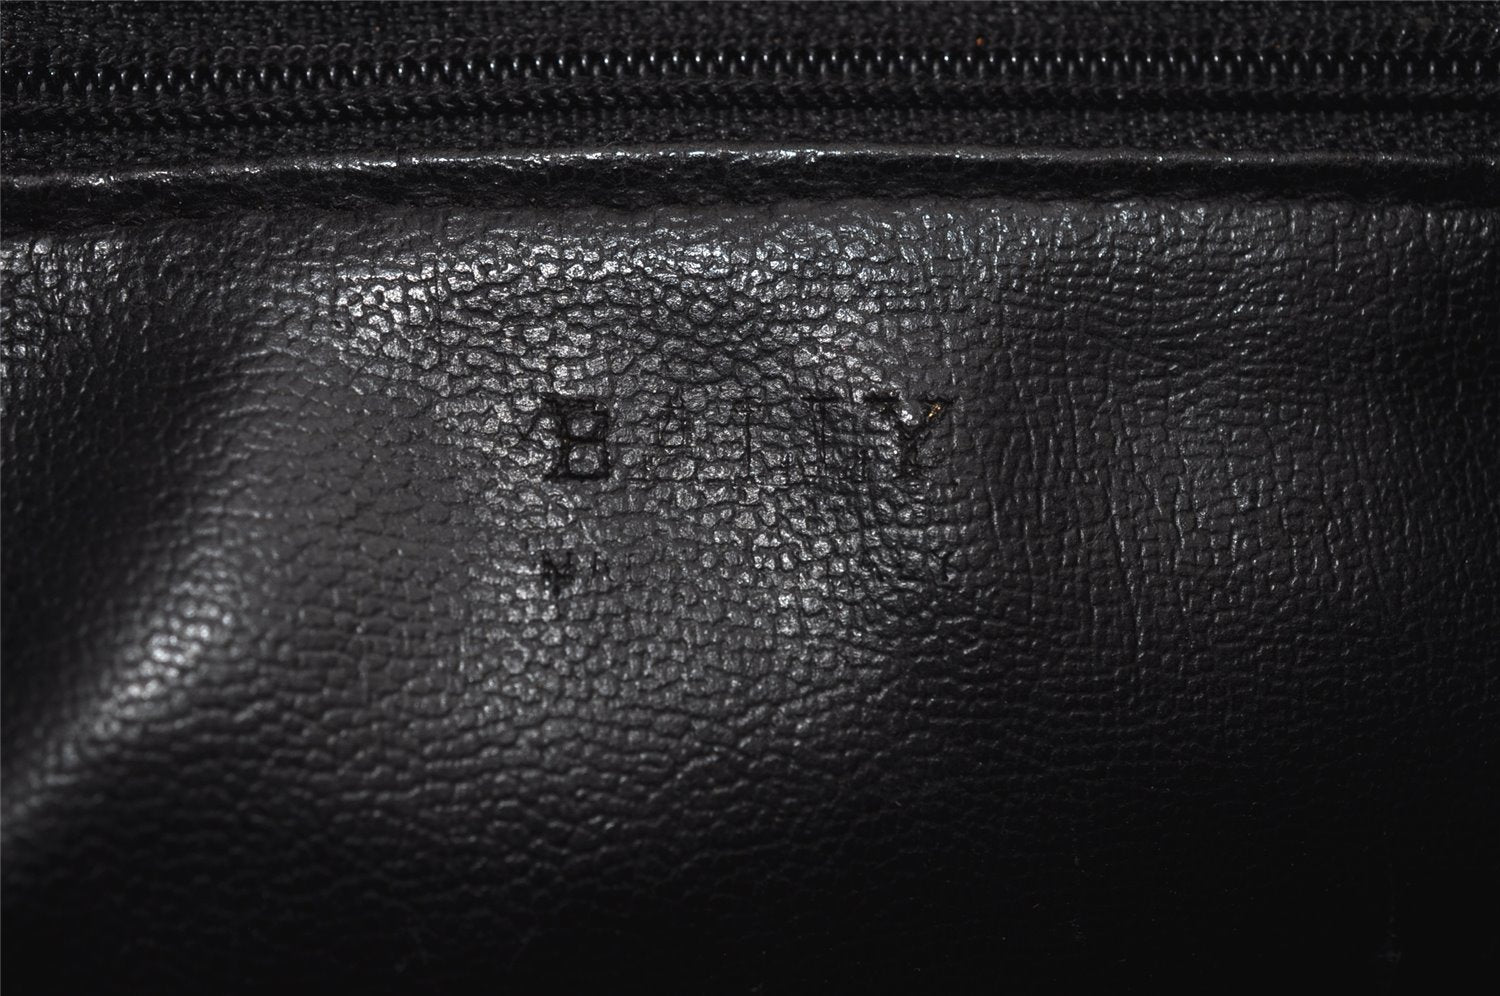 Authentic BALLY Leather Drawstring Shoulder Cross Body Bag Purse Black 2140I